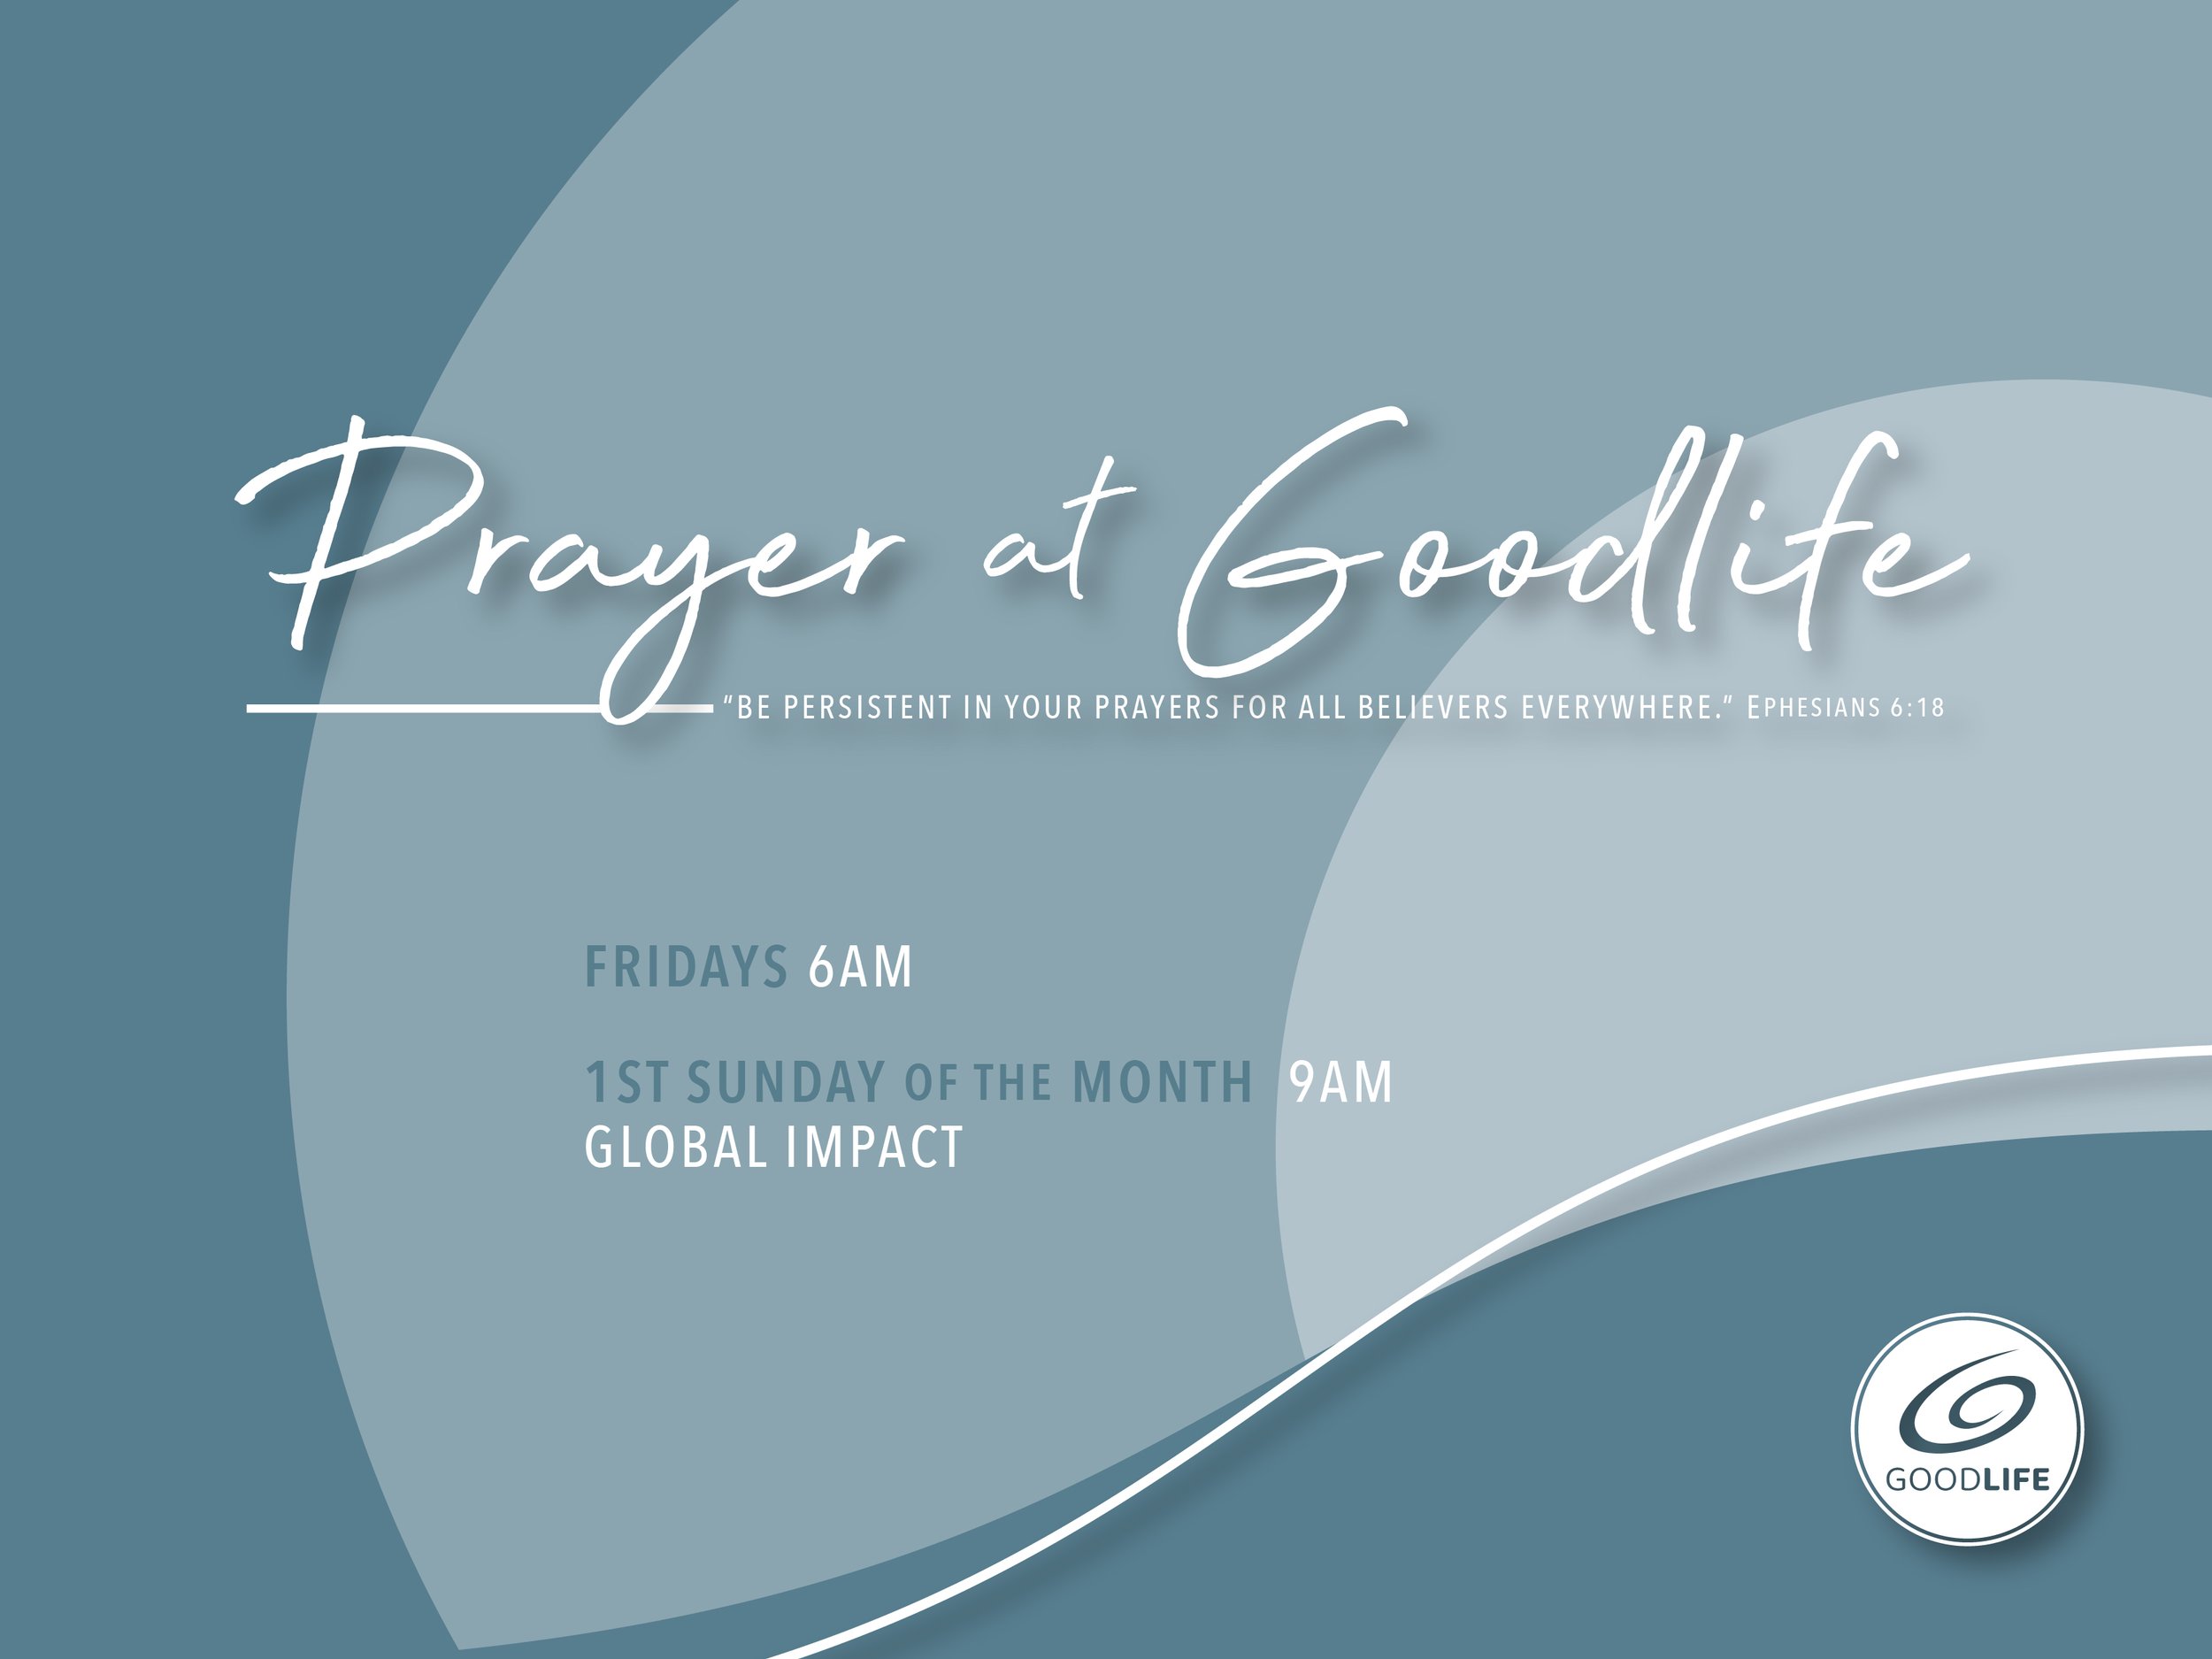 Prayer at Goodlife-E-mail.jpg